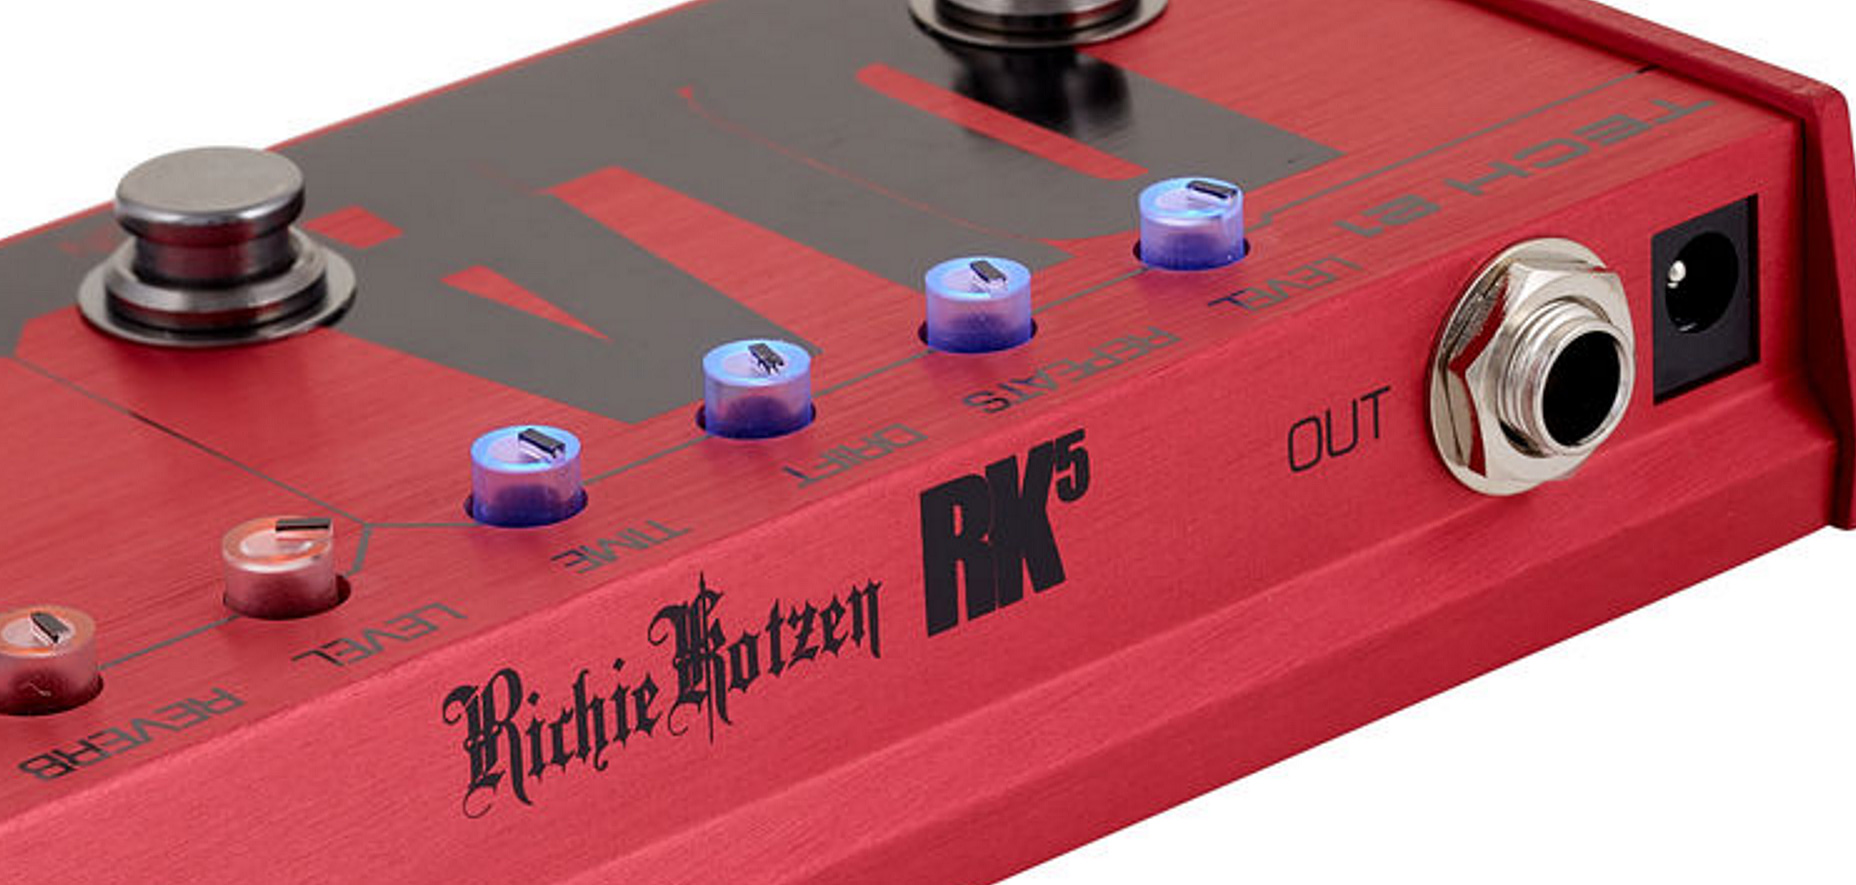 Tech 21 Richie Kotzen Signature Rk5 Fly Rig - Multieffect for electric guitar - Variation 6